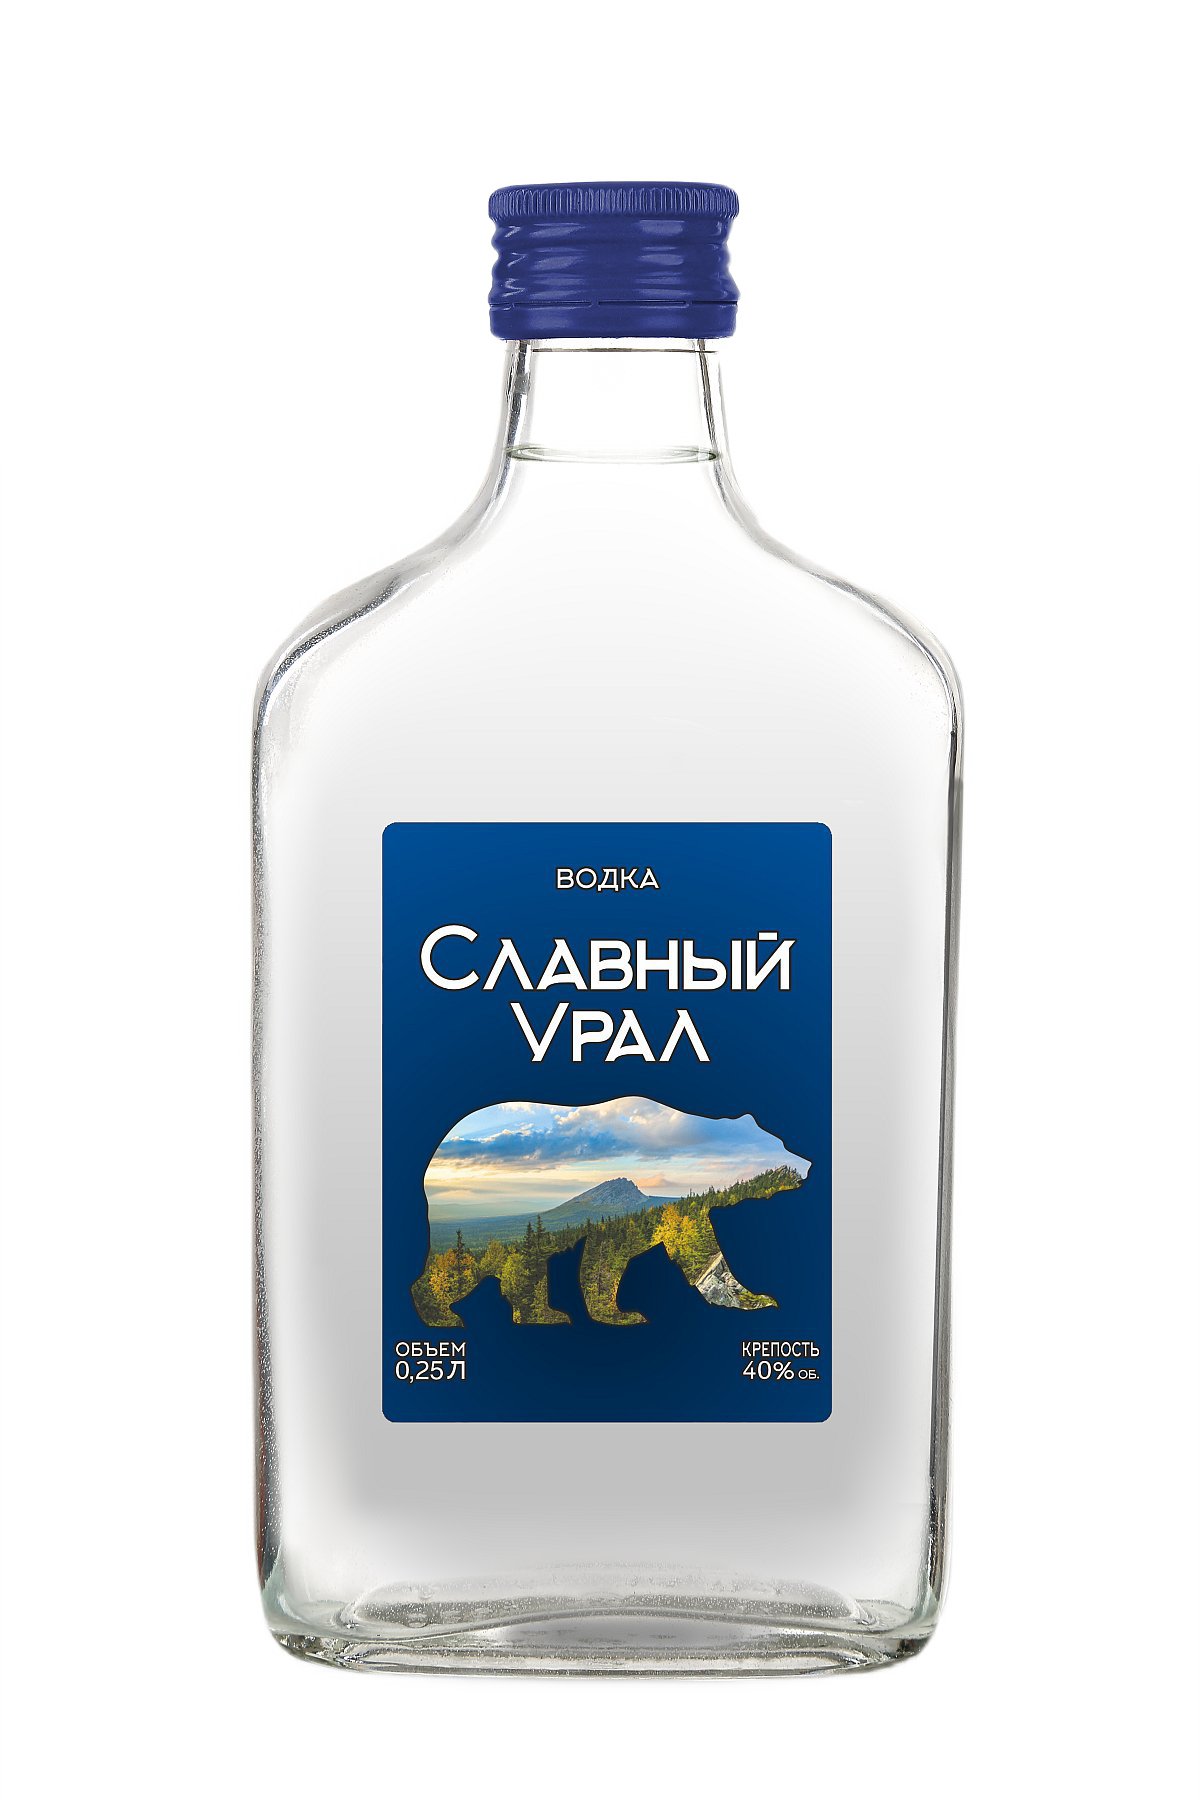 光荣乌拉尔伏特加 (Slavniy Ural) - 0.25 L : 光荣乌拉尔伏特加 (Slavniy Ural)